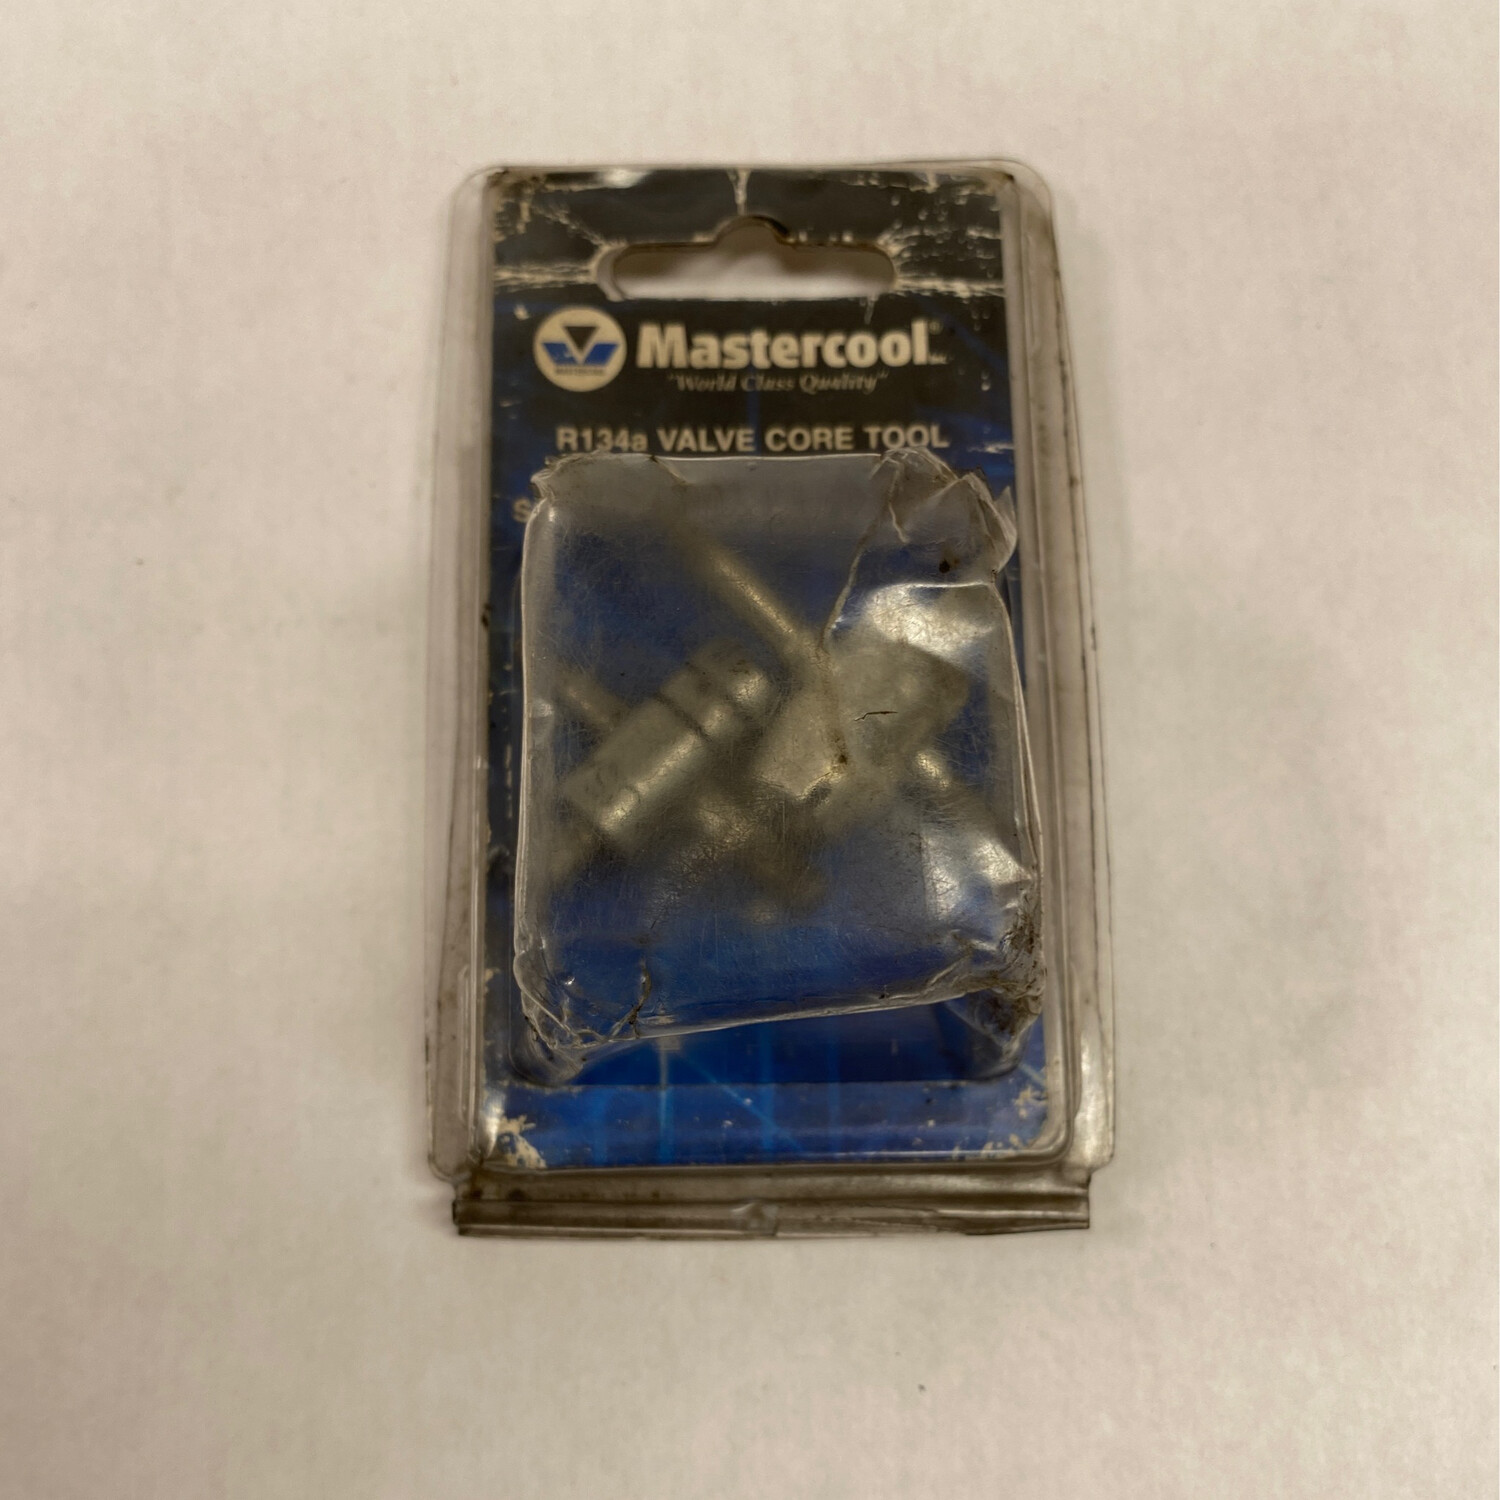 Mastercool R134a Valve Core Tool, 81290